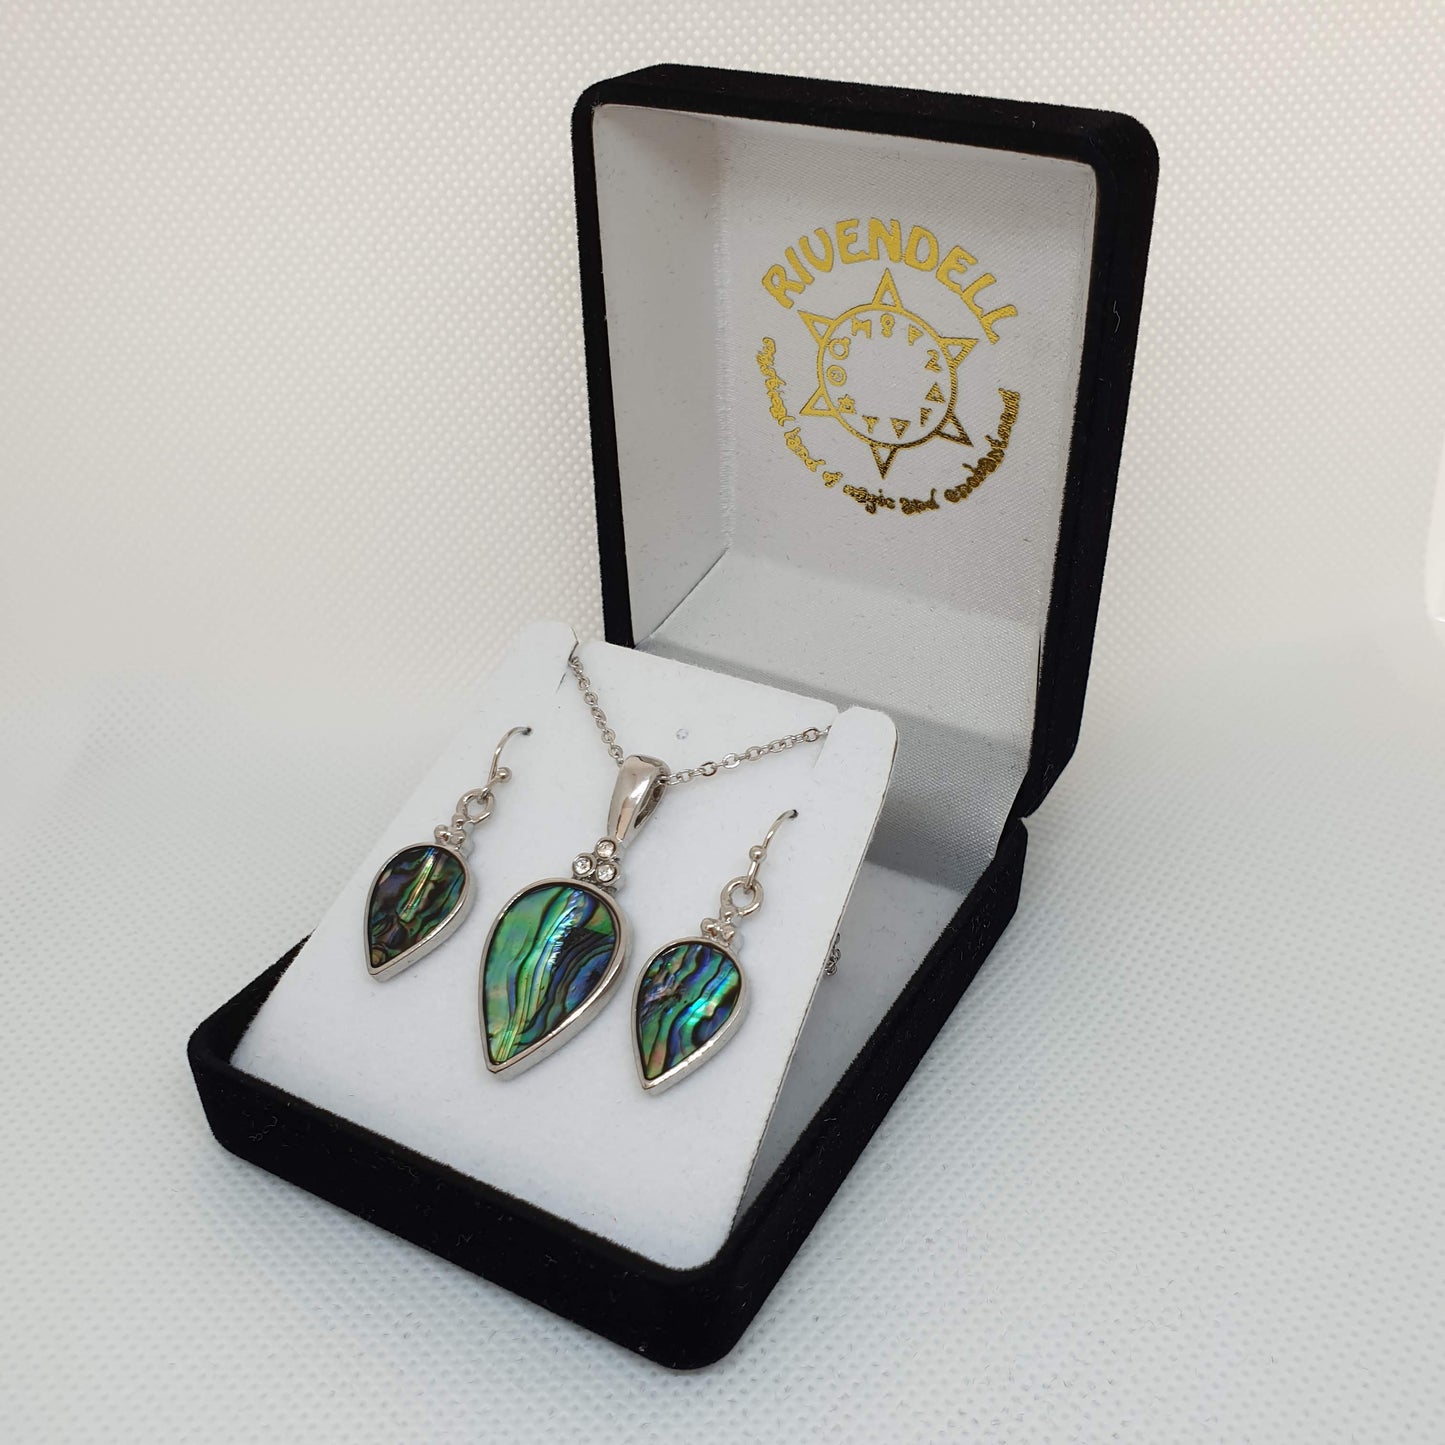 Paua Necklace and Earrings Set - Rivendell Shop